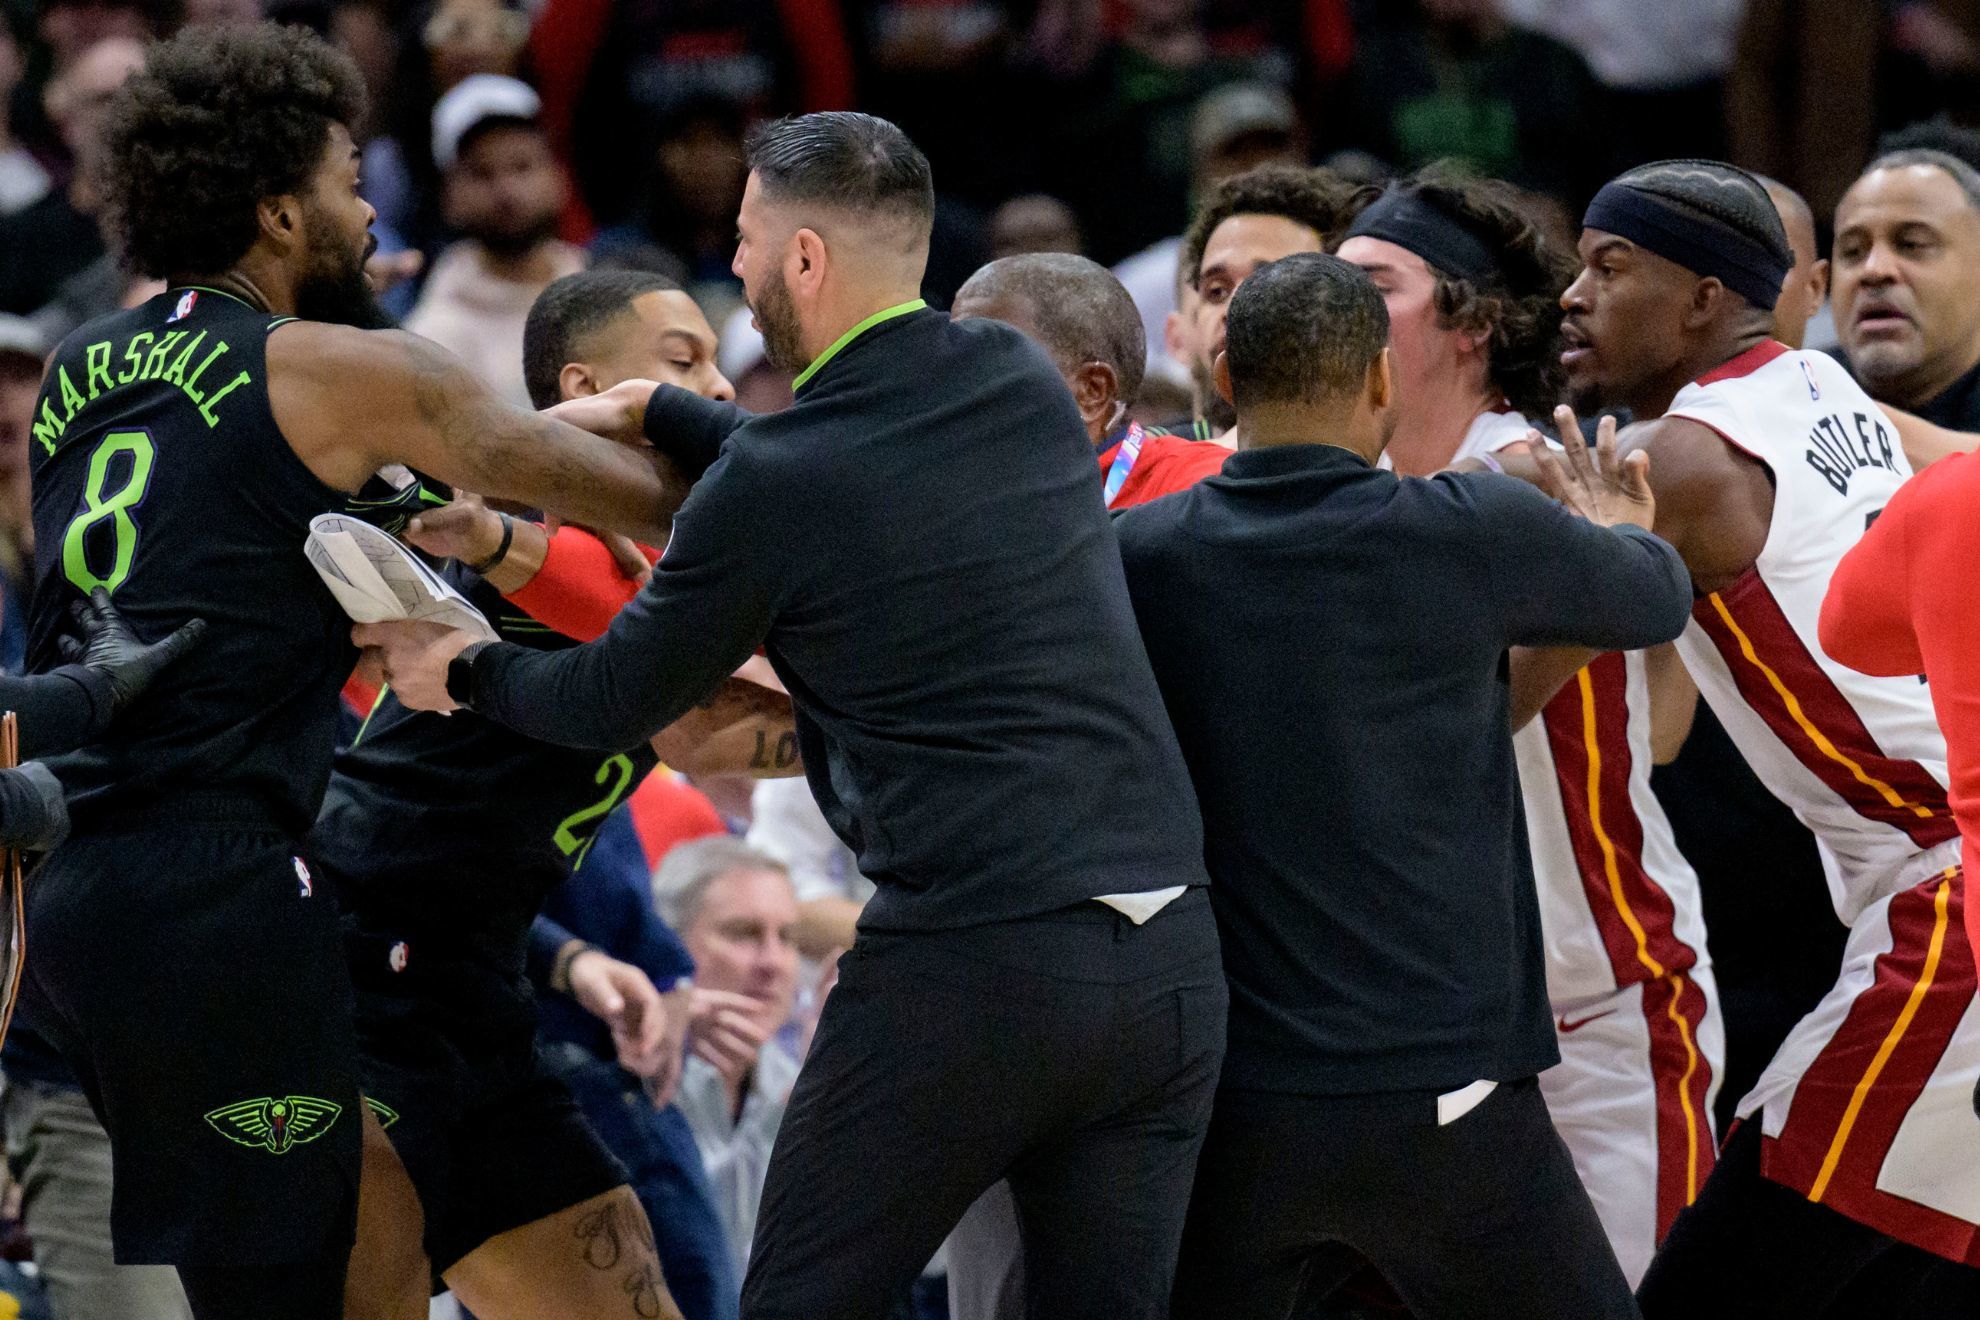 Naji Marshall chokes Jimmy Butler, sparks brawl between Heat and Pelicans